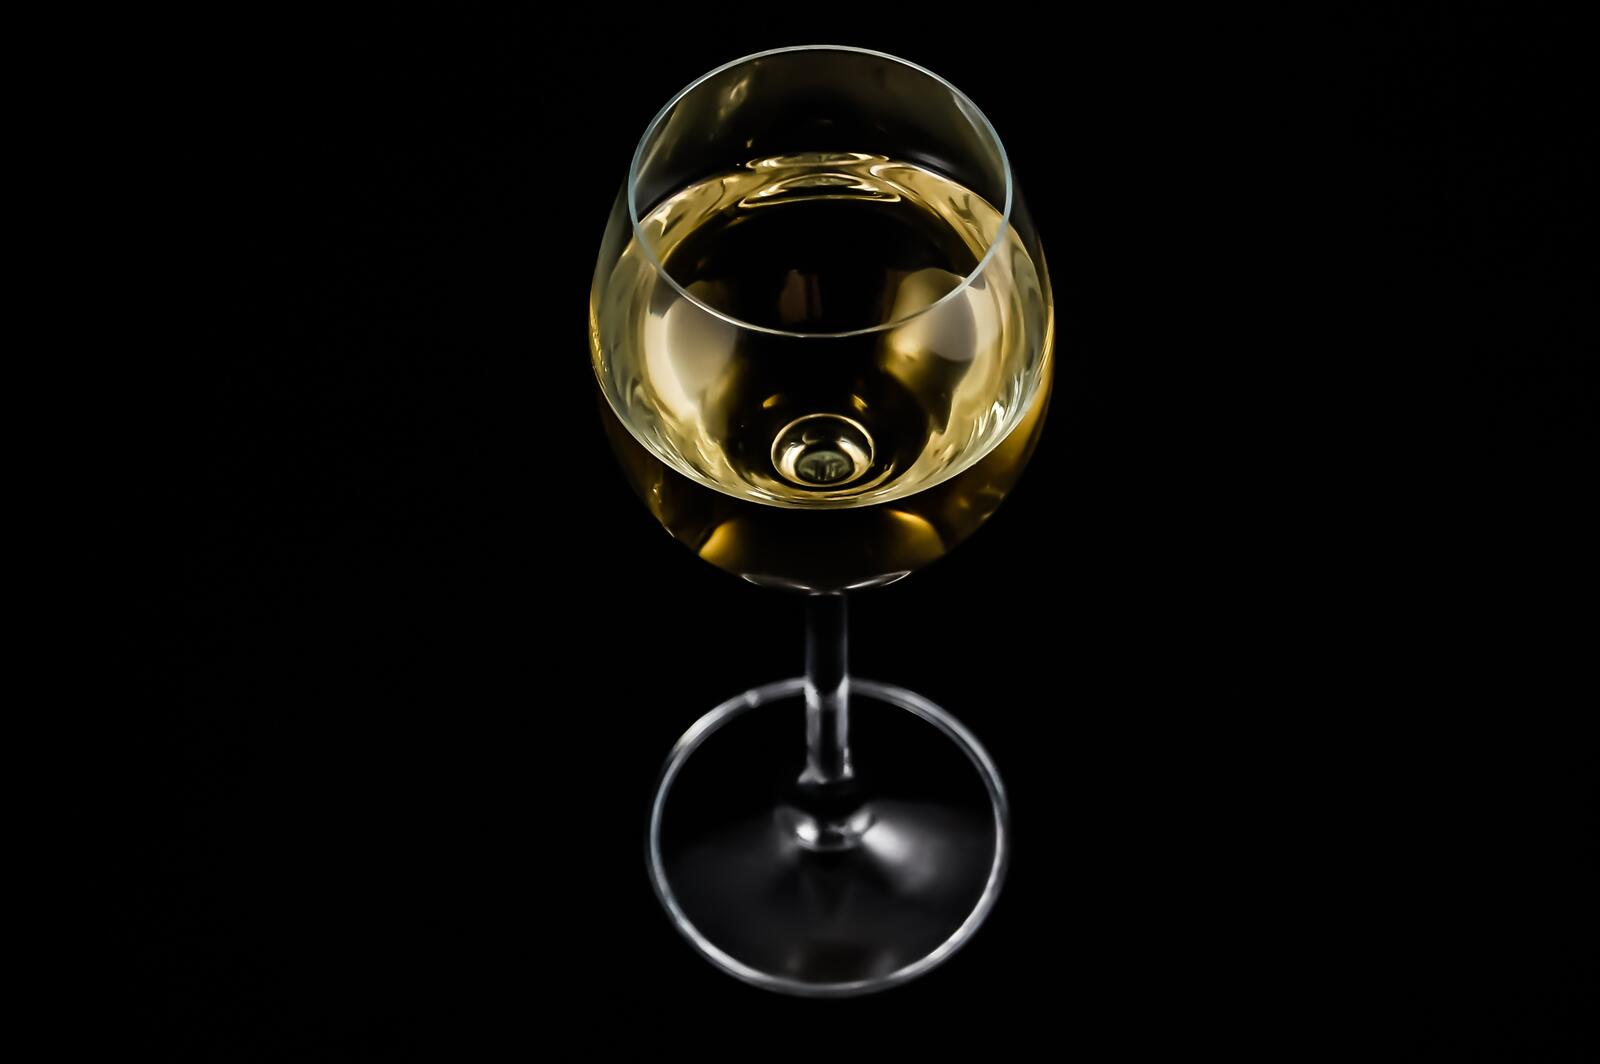 Free photo White wine glass on black background